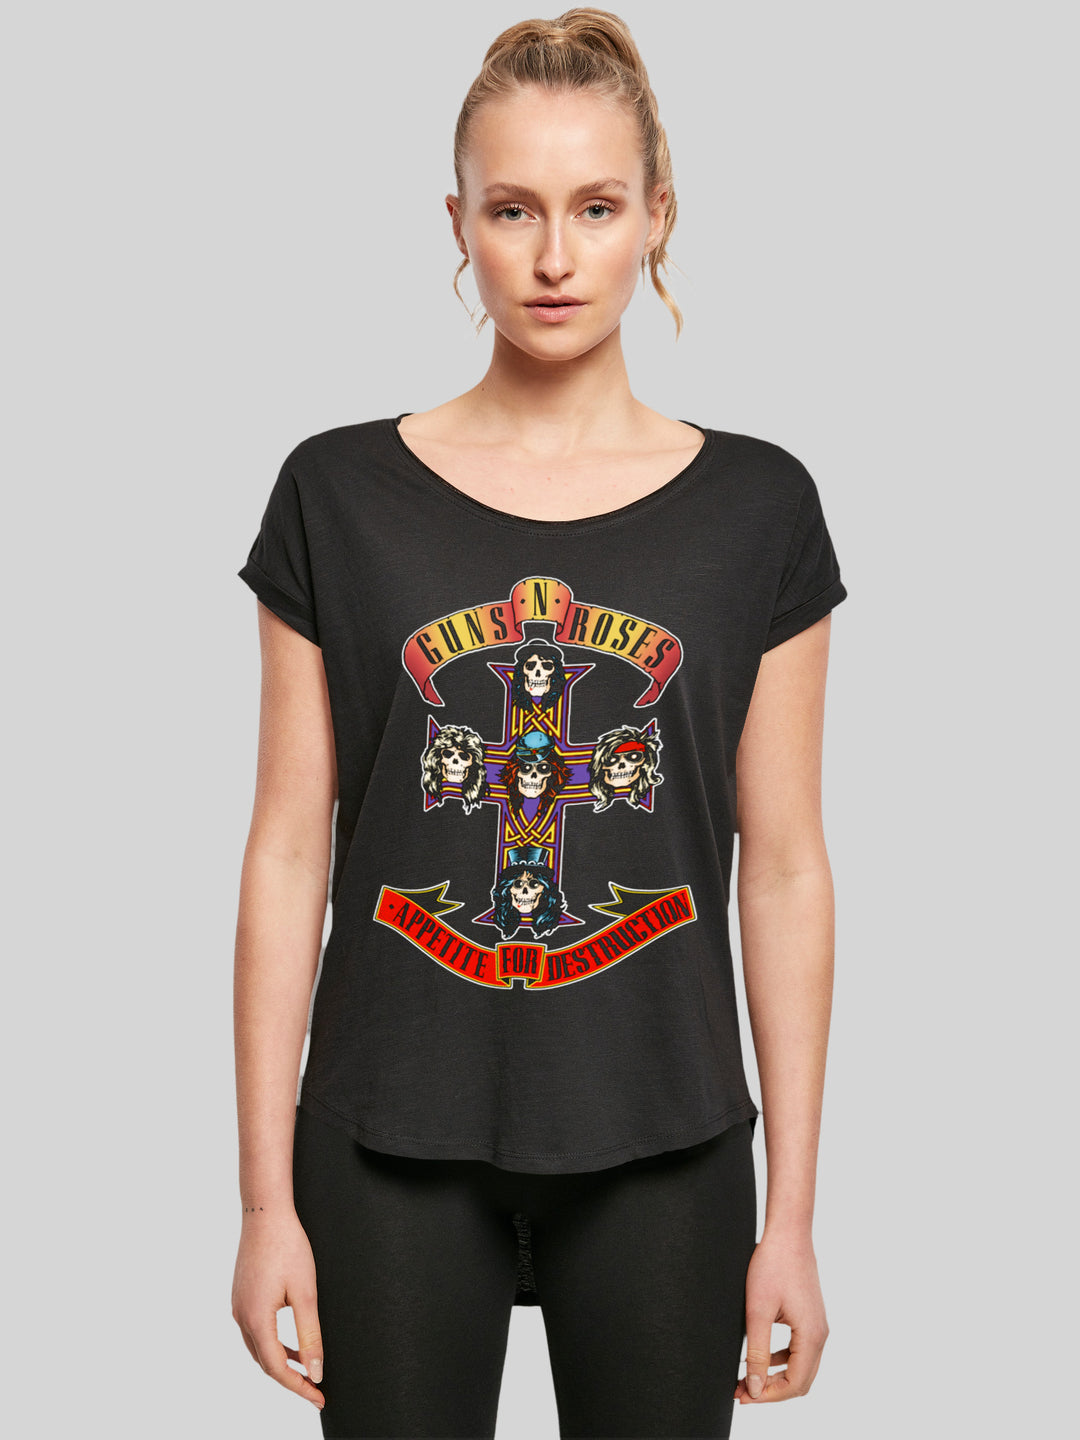 Guns 'n' Roses T-Shirt | Appetite For Destruction | Premium Long Ladies Tee